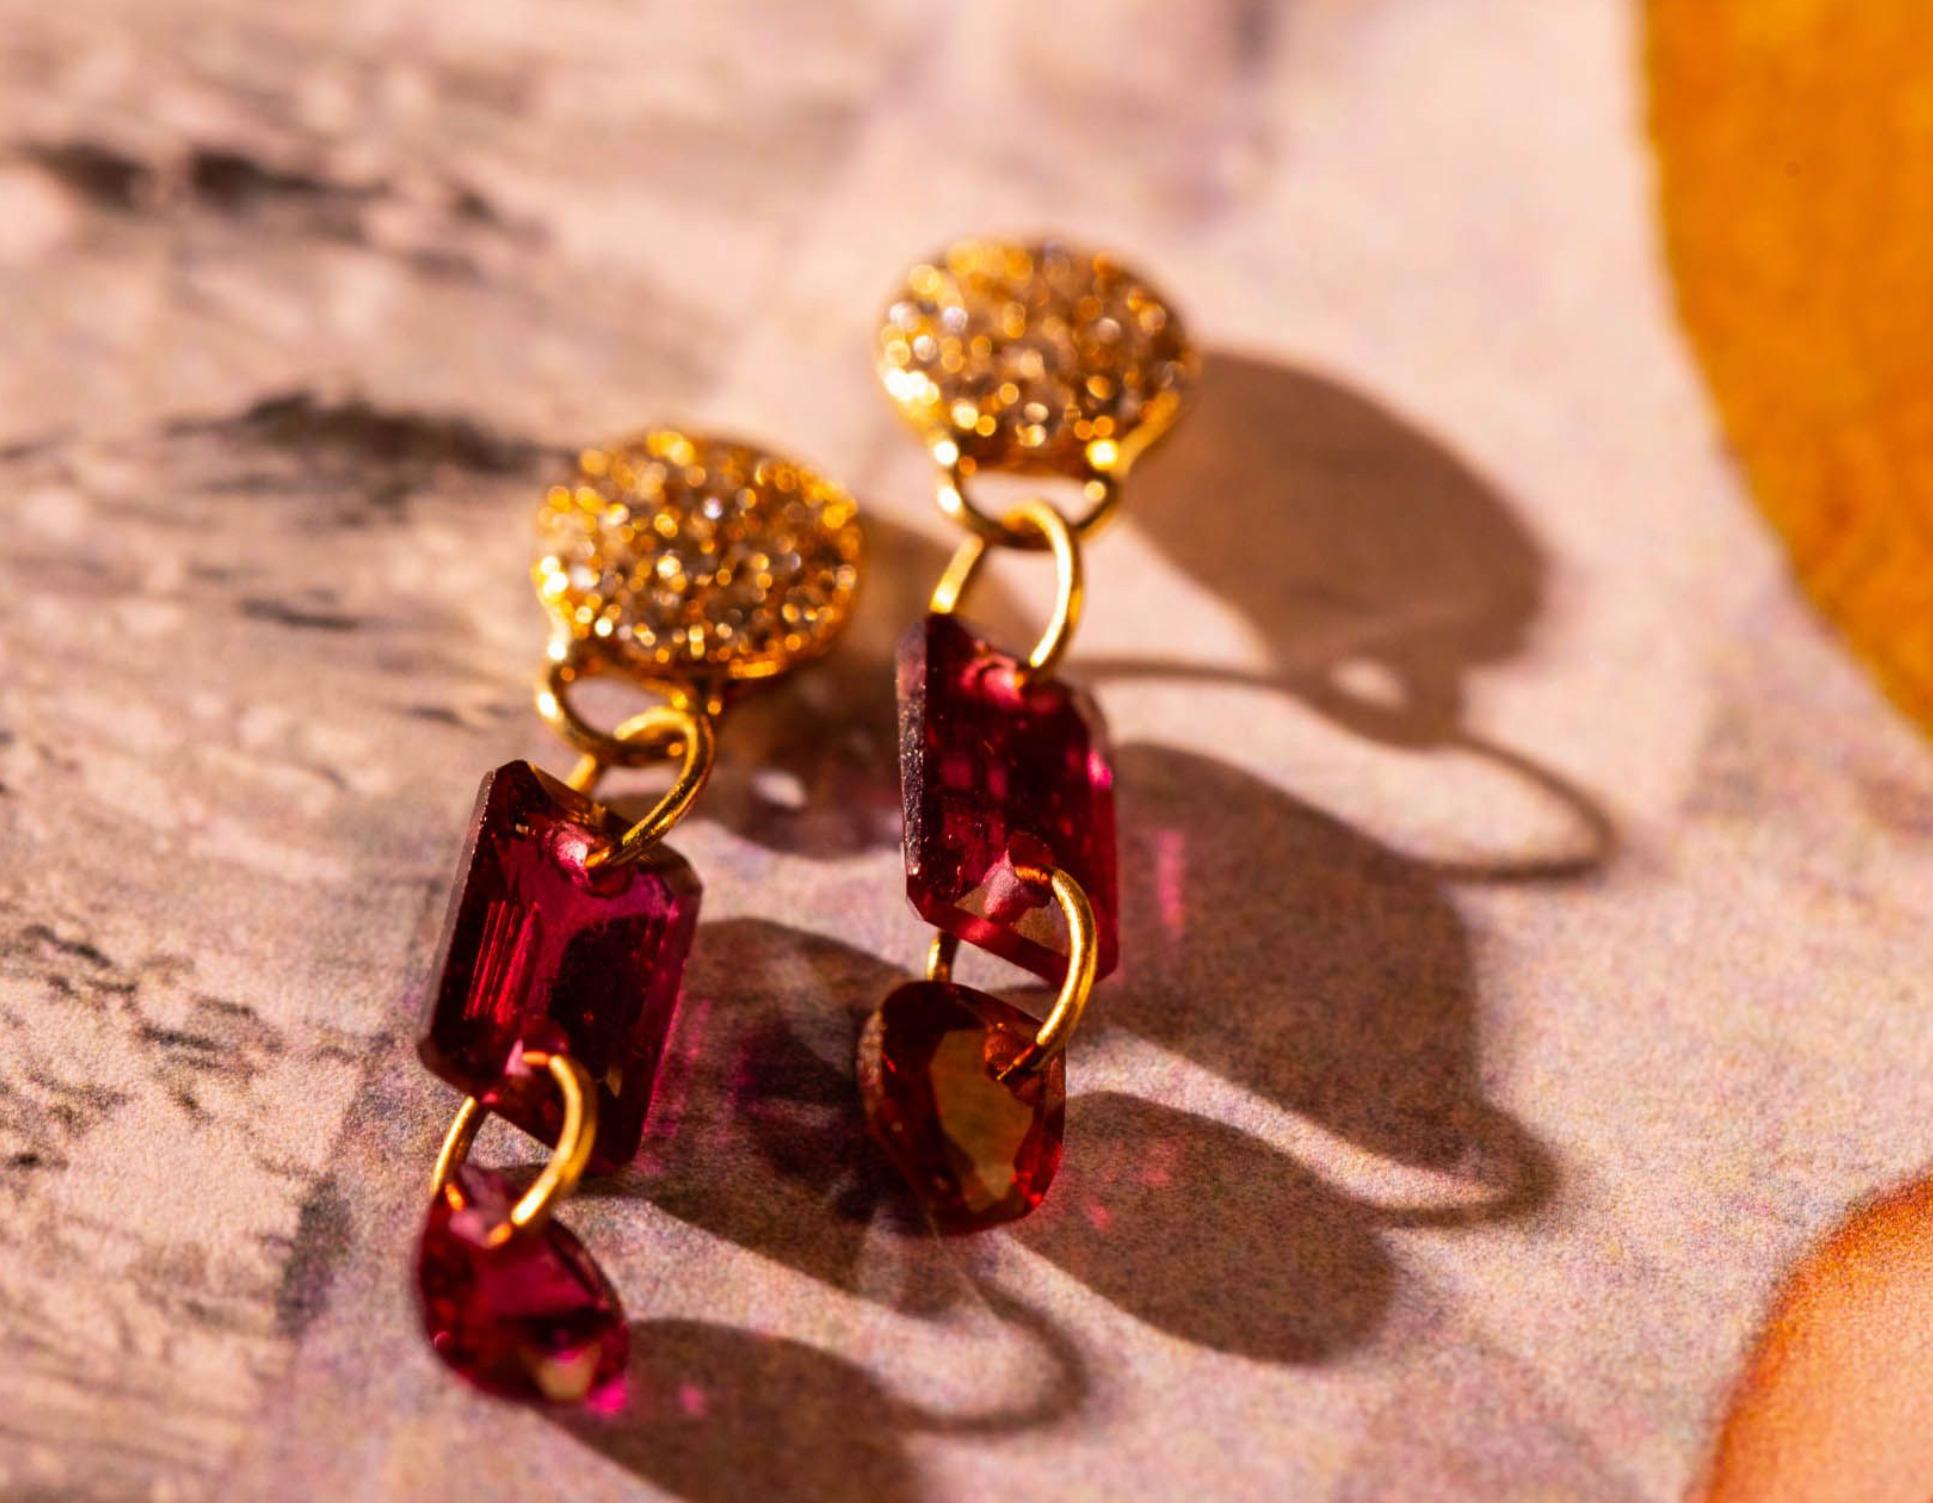 Contemporary Paris & Lily handmade, 18K gold earrings with pave diamond studs & garnets